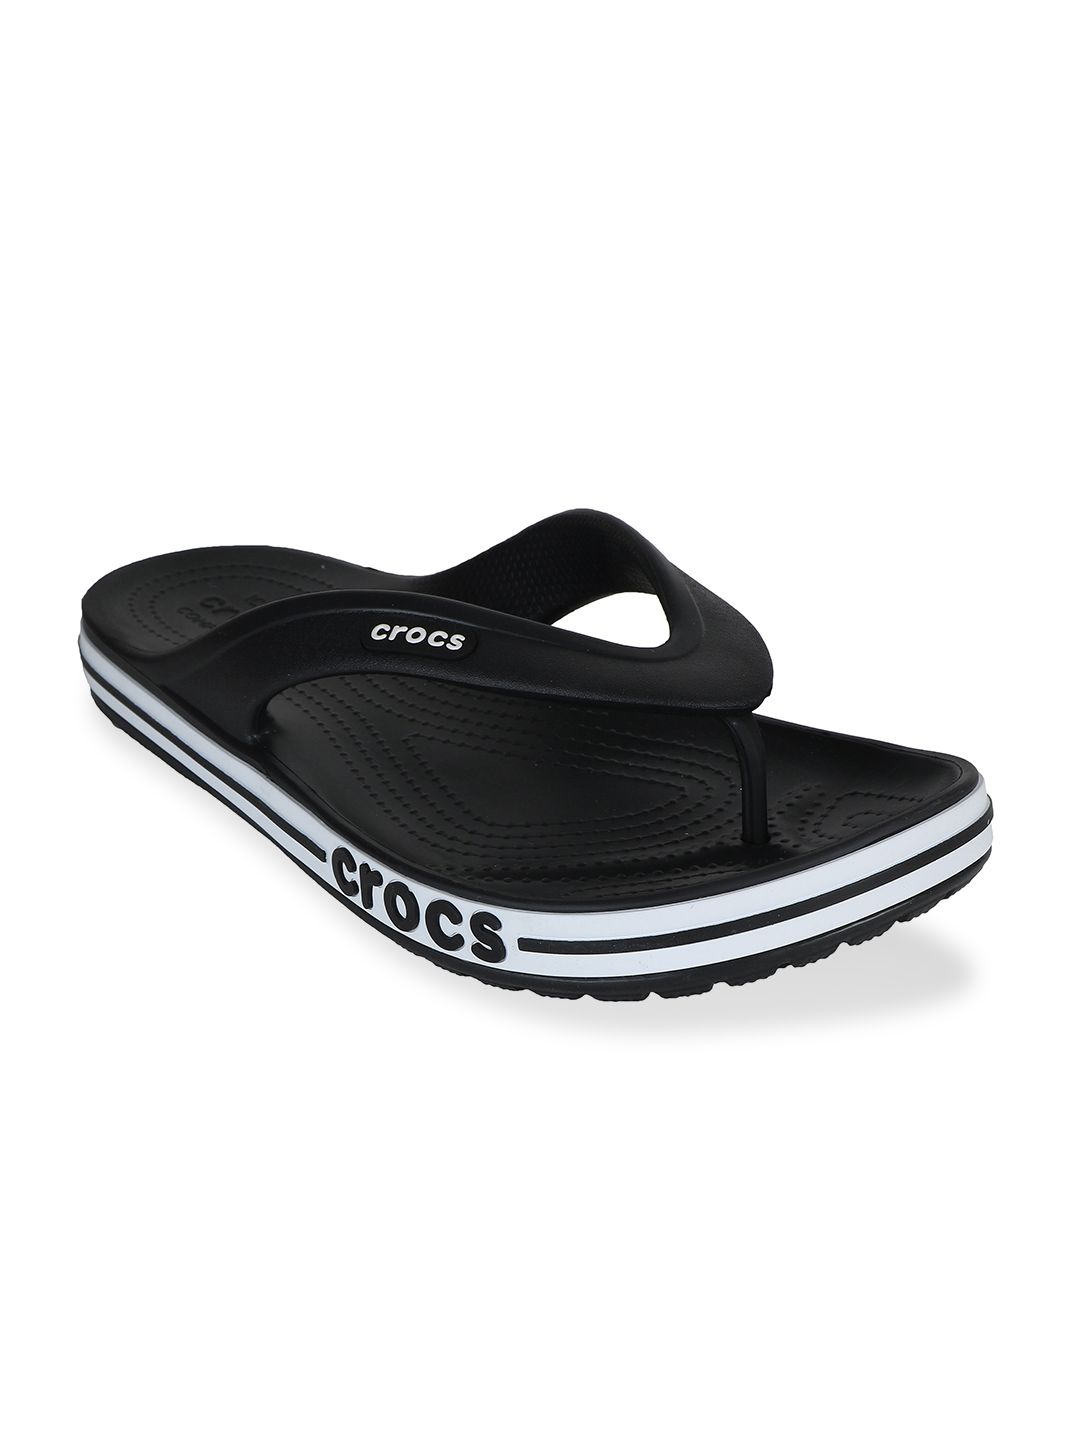 Crocs Unisex Black & White Croslite Bayaband Thong Flip-Flops Price in India